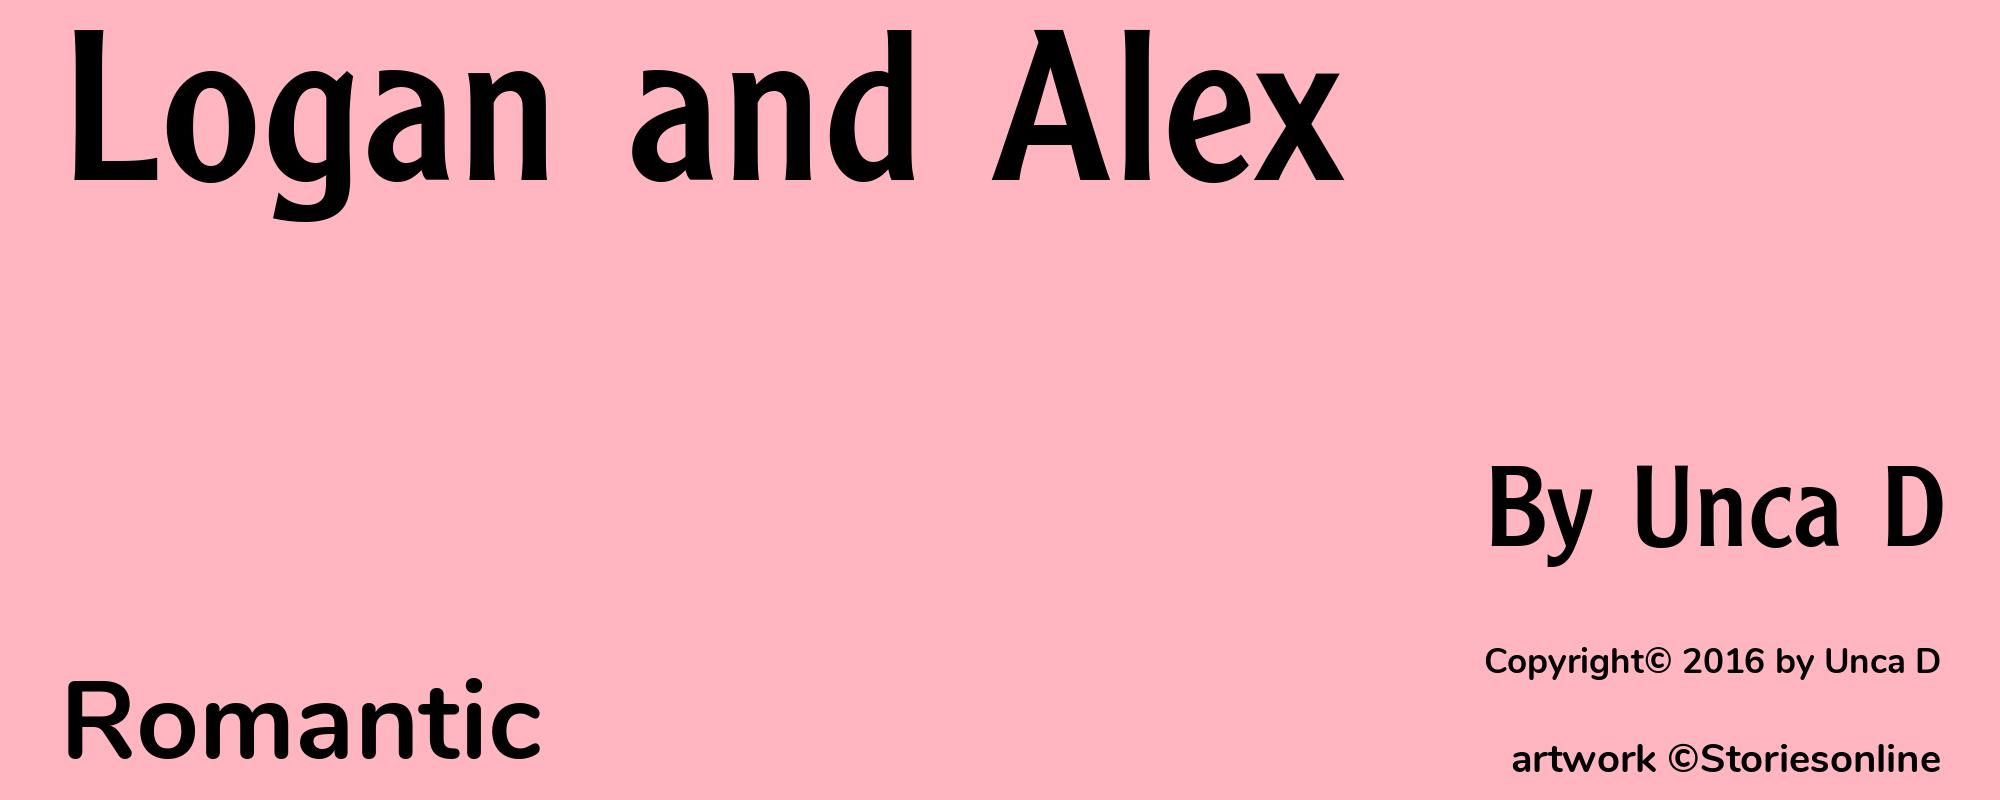 Logan and Alex - Cover